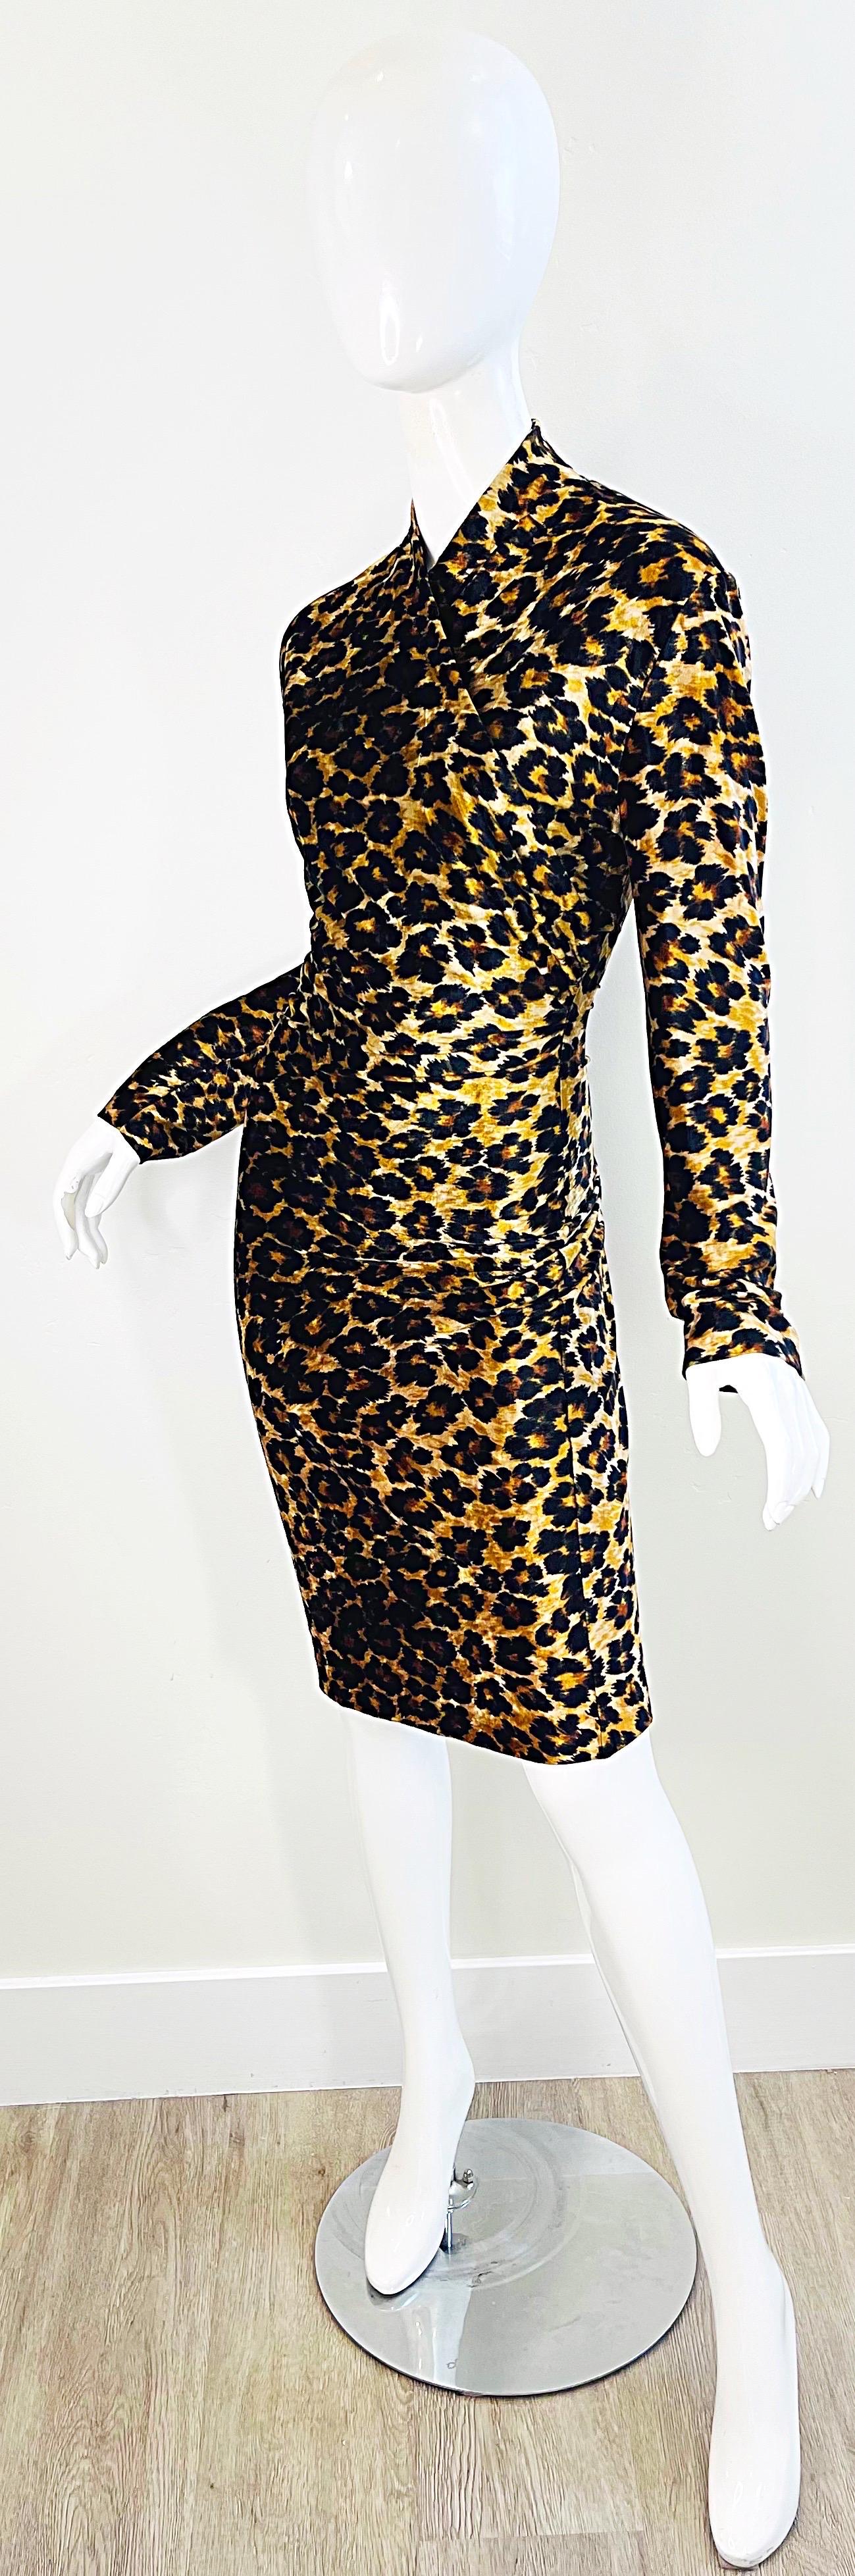 Women's Documented Patrick Kelly 1989 Leopard Print Size Large Velour Vintage Dress 80s For Sale